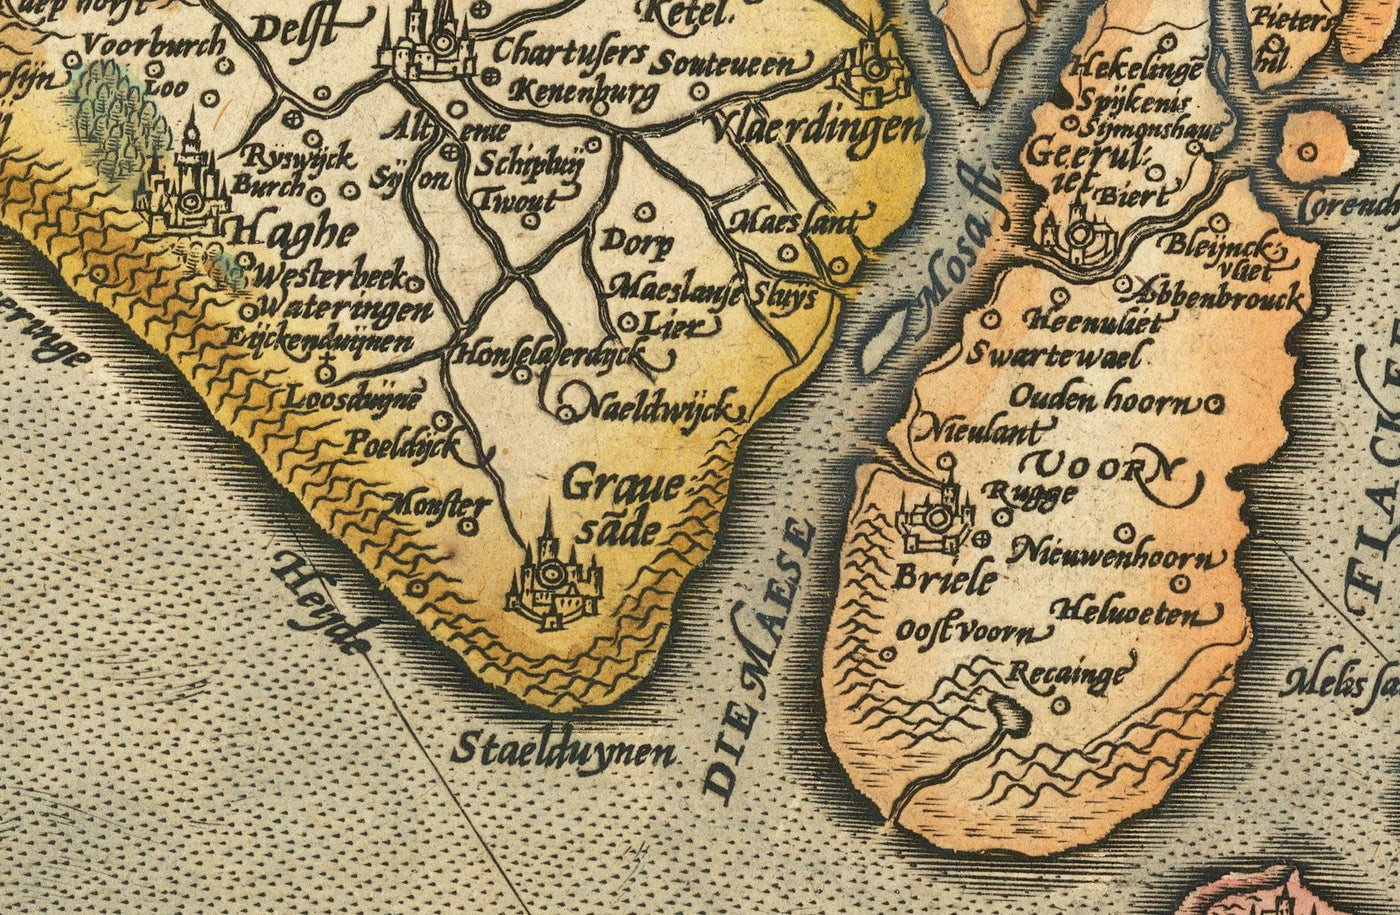 Old Map of Holland and Utrecht, 1595 by Abraham Ortelius - Amsterdam, Rotterdam, Hague, Utrecht